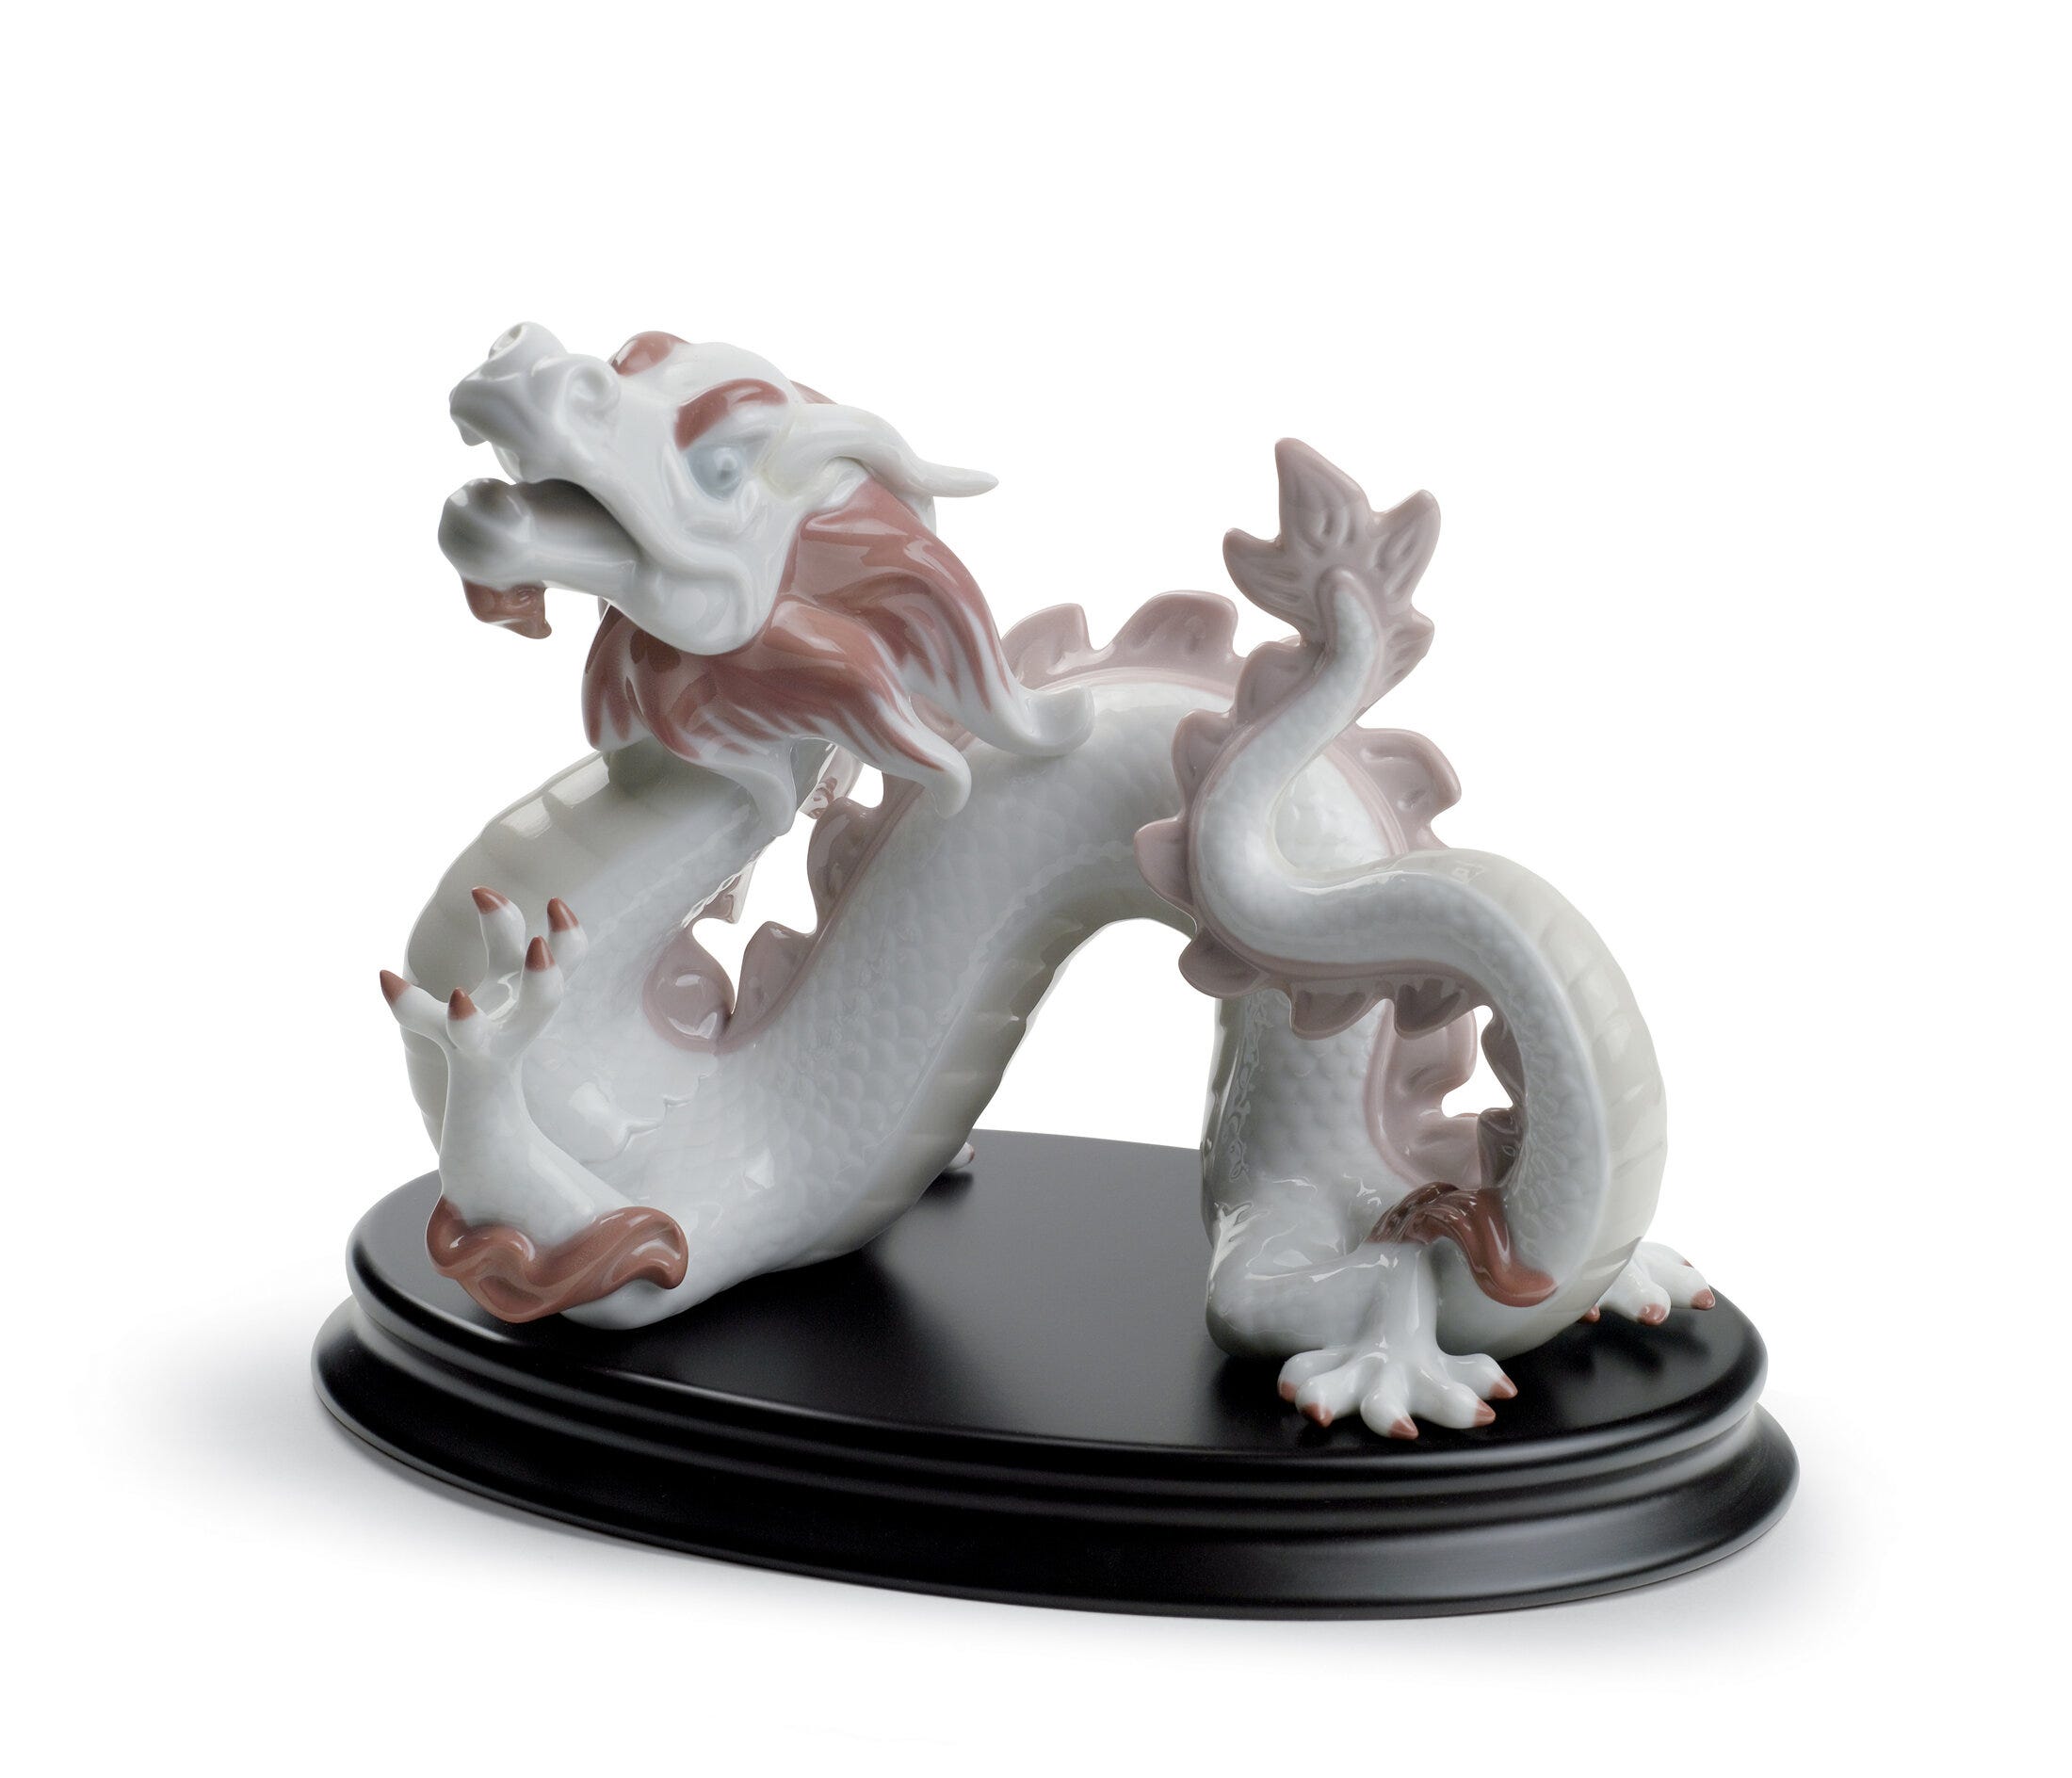 The Dragon Figurine